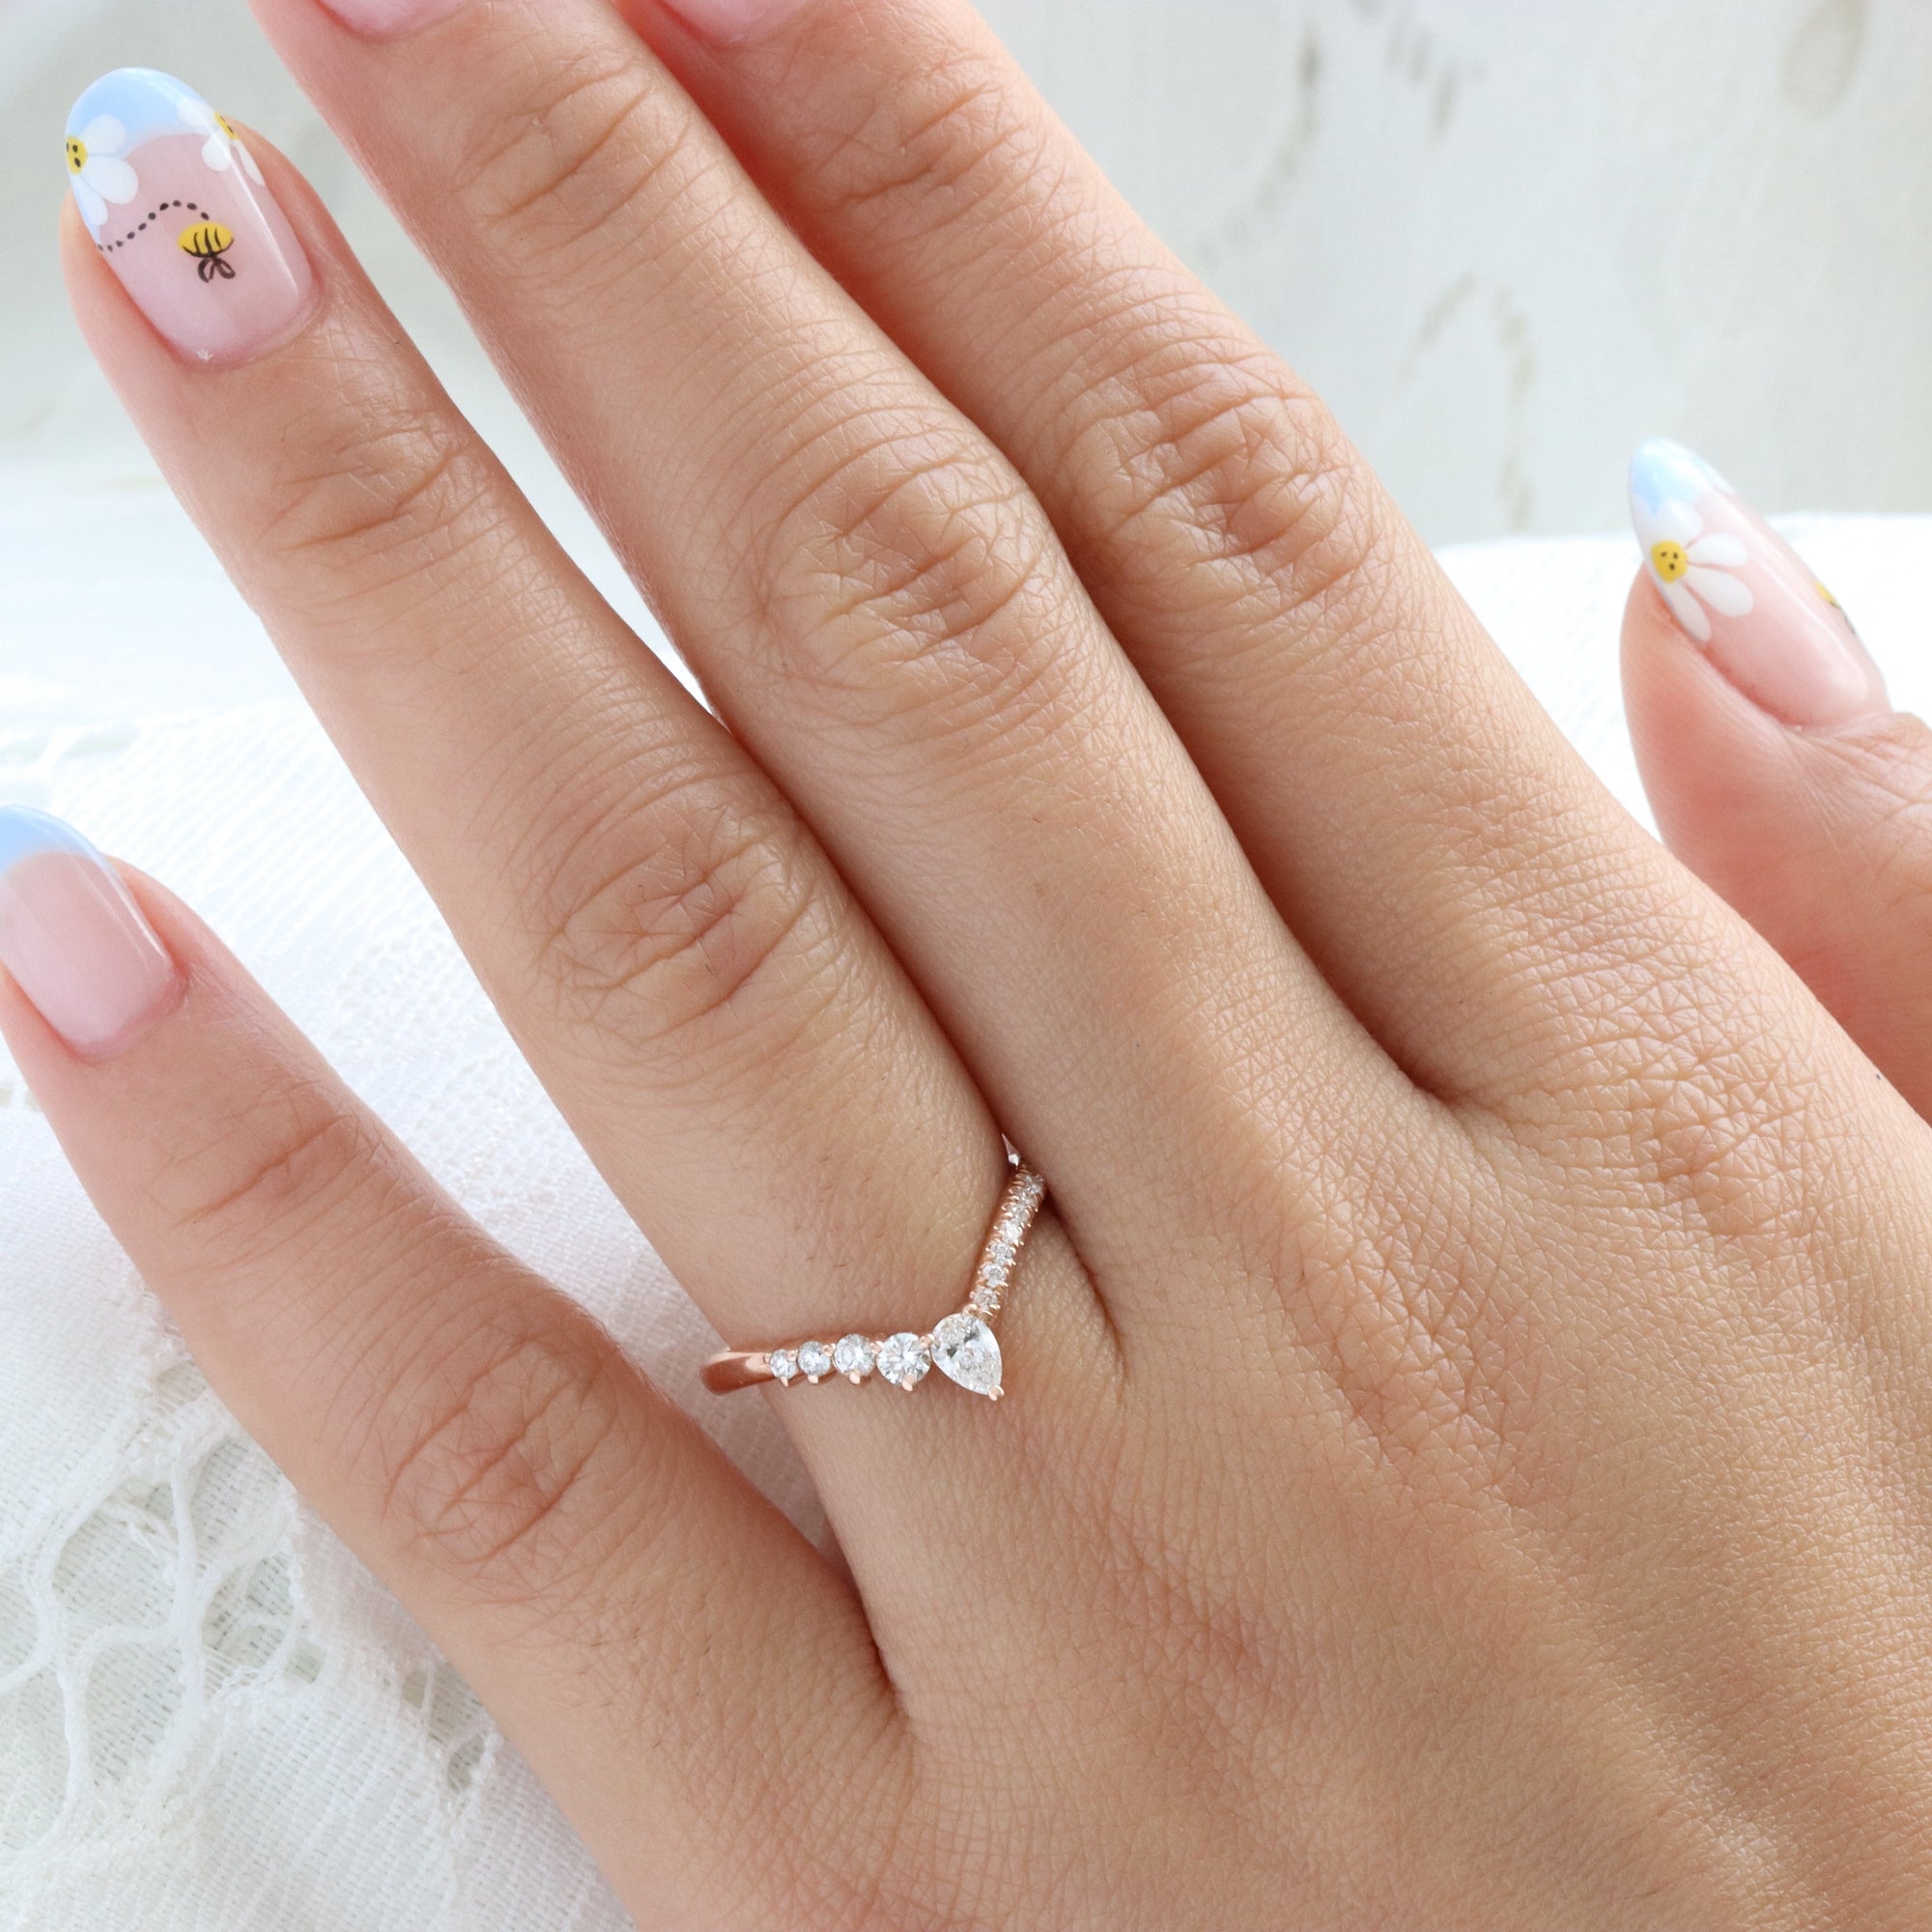 Wishbone diamond wedding ring rose gold V shaped curved pave wedding band la more design jewelry